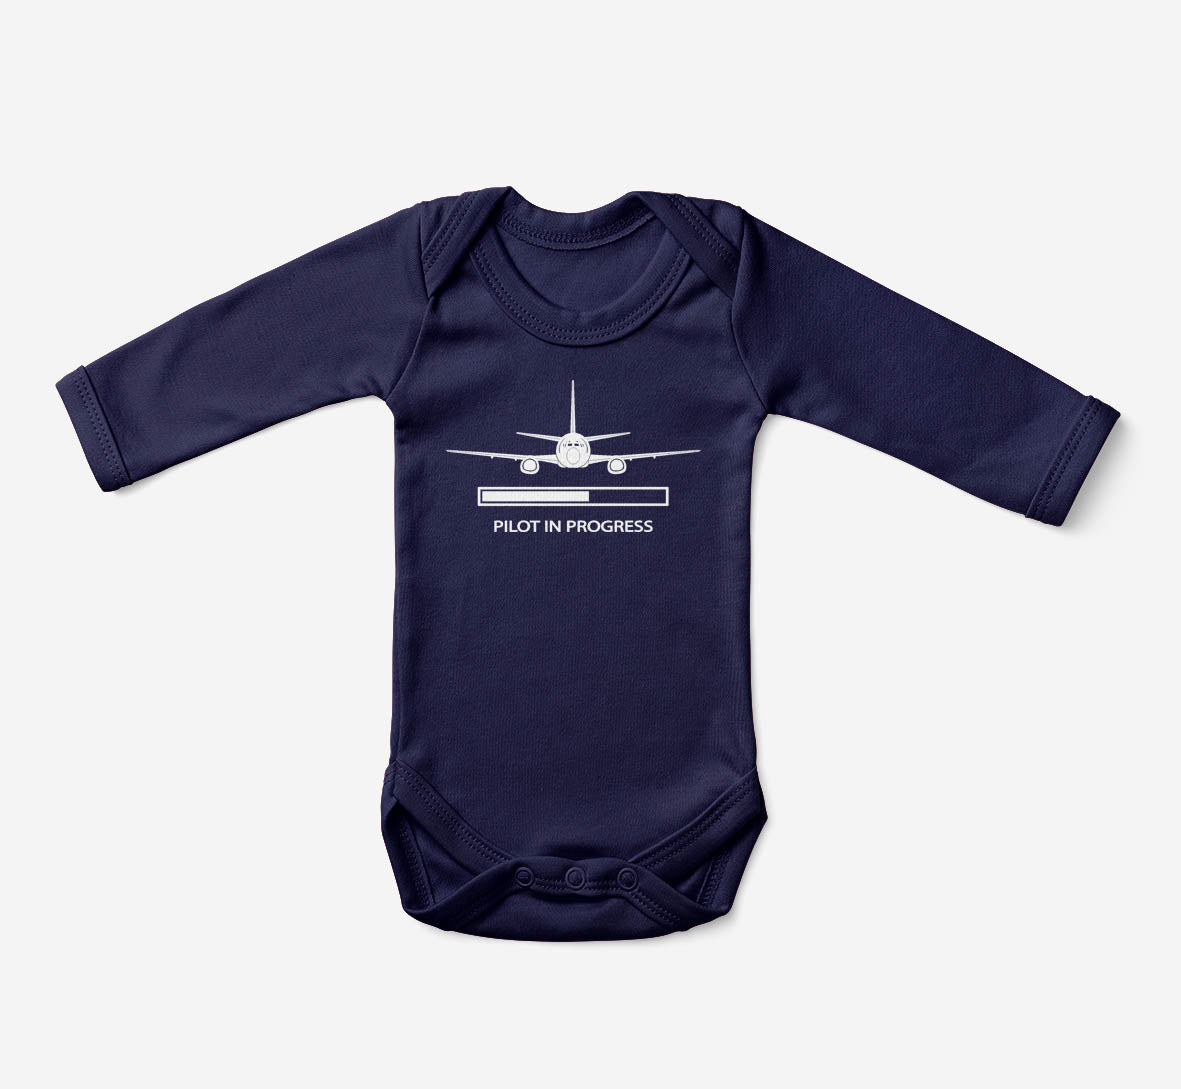 Pilot In Progress Designed Baby Bodysuits